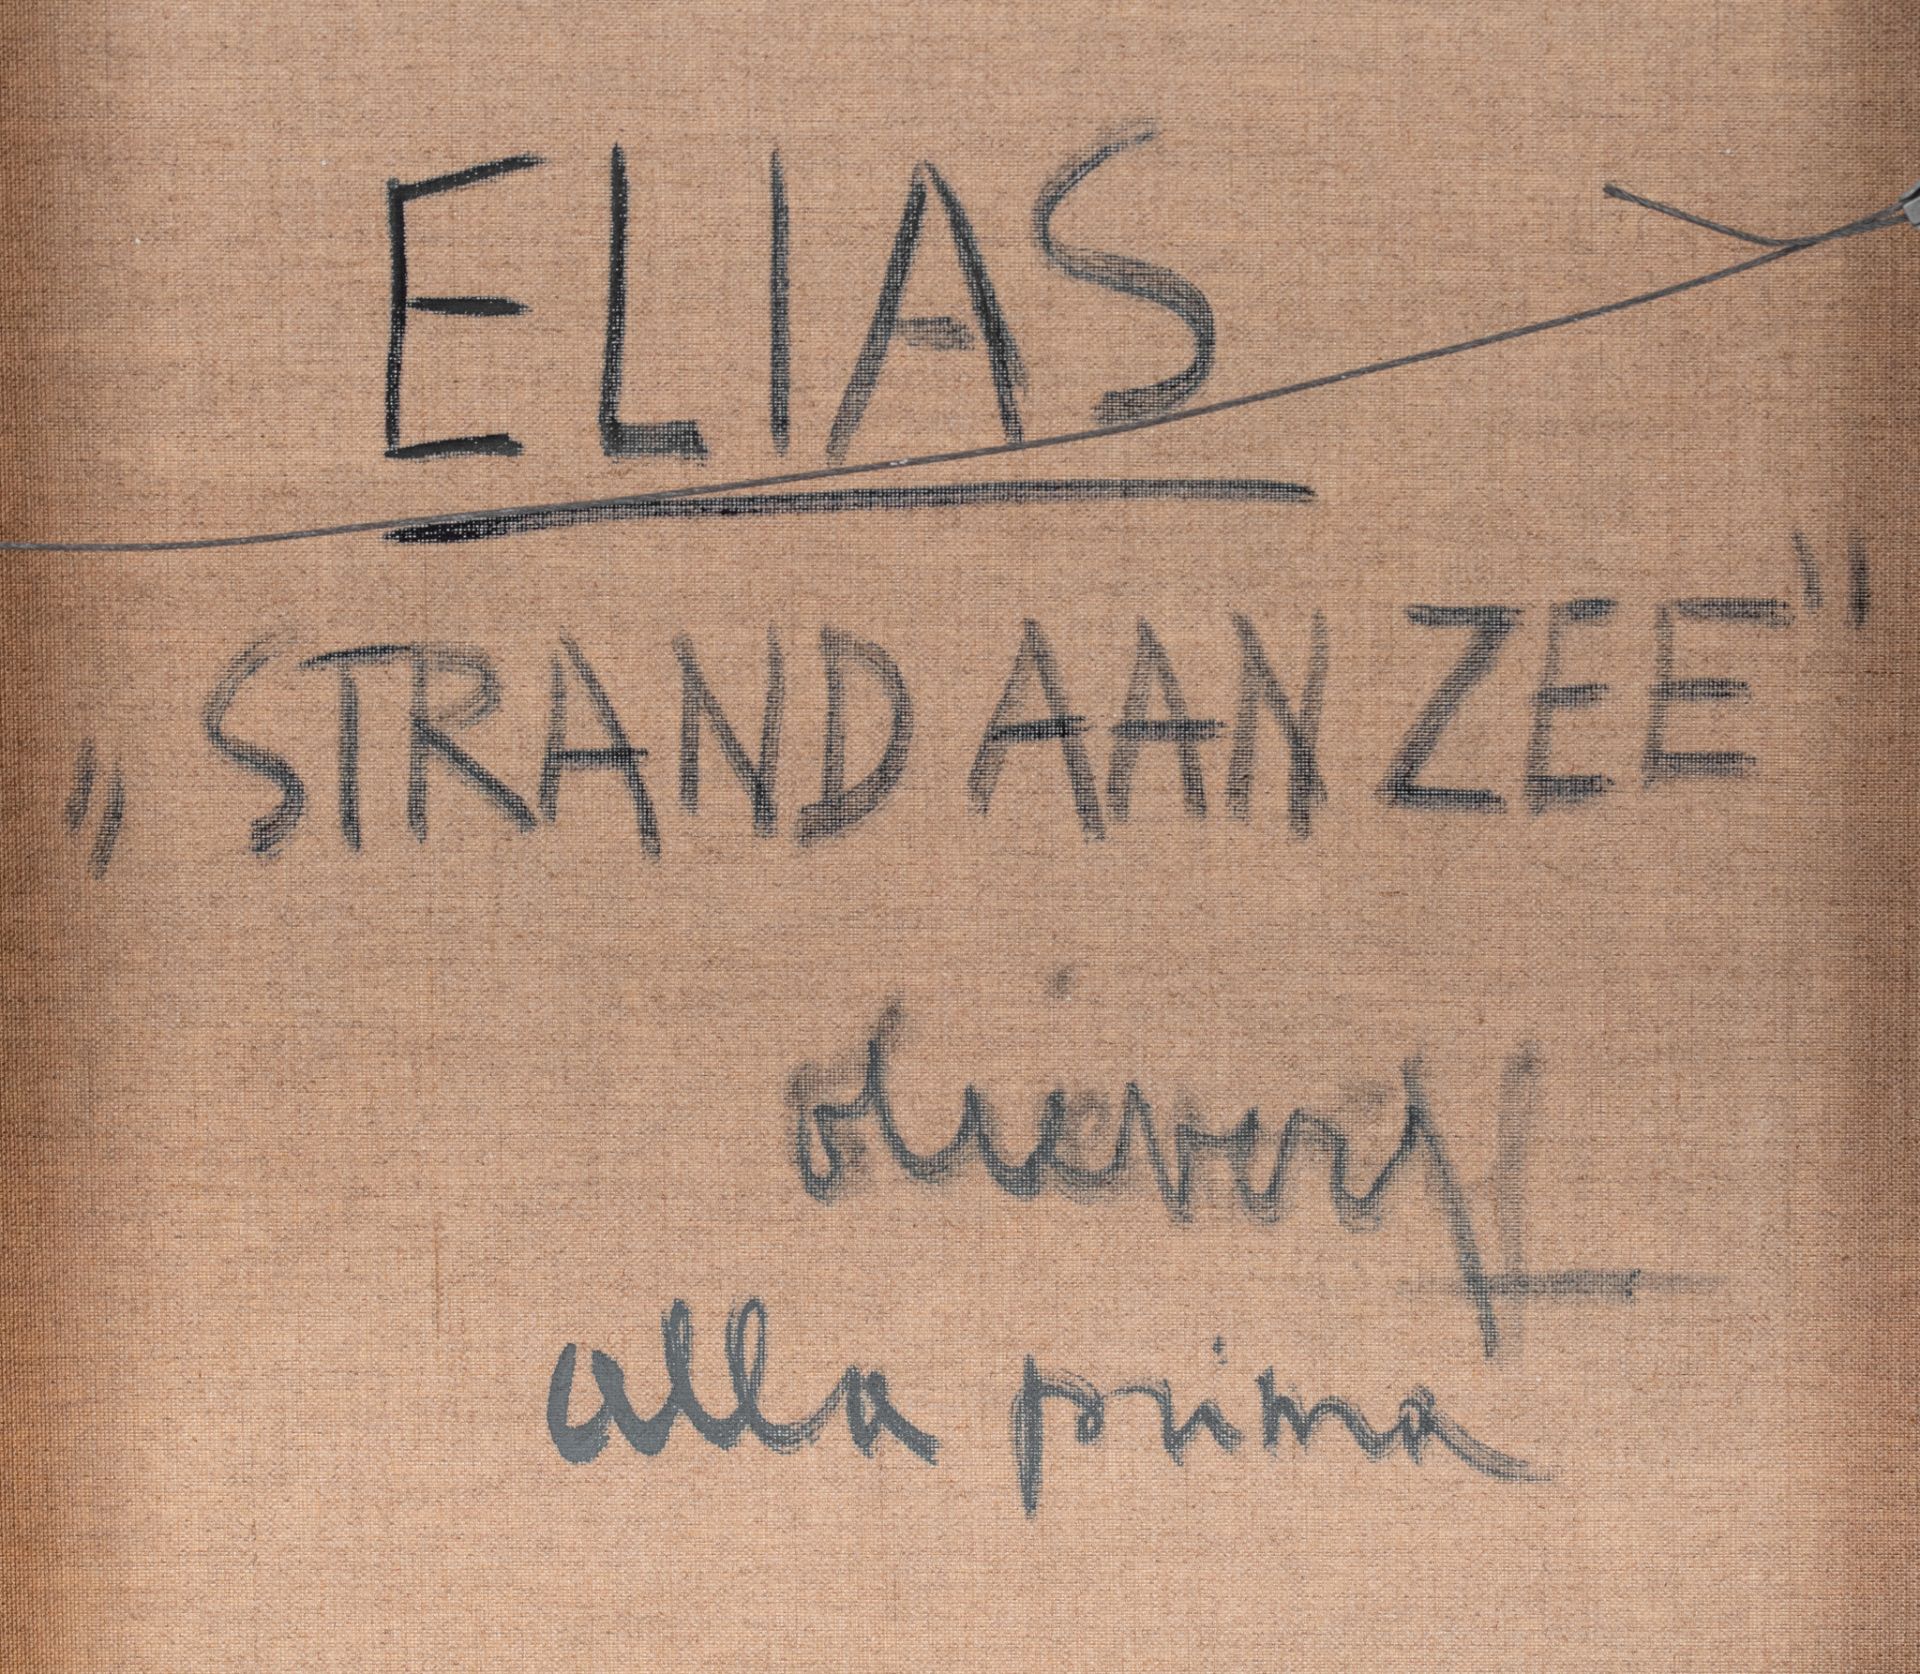 Etienne Elias (1936-2007), 'Strand aan zee', oil on canvas, 95 x 114 cm - Image 4 of 7